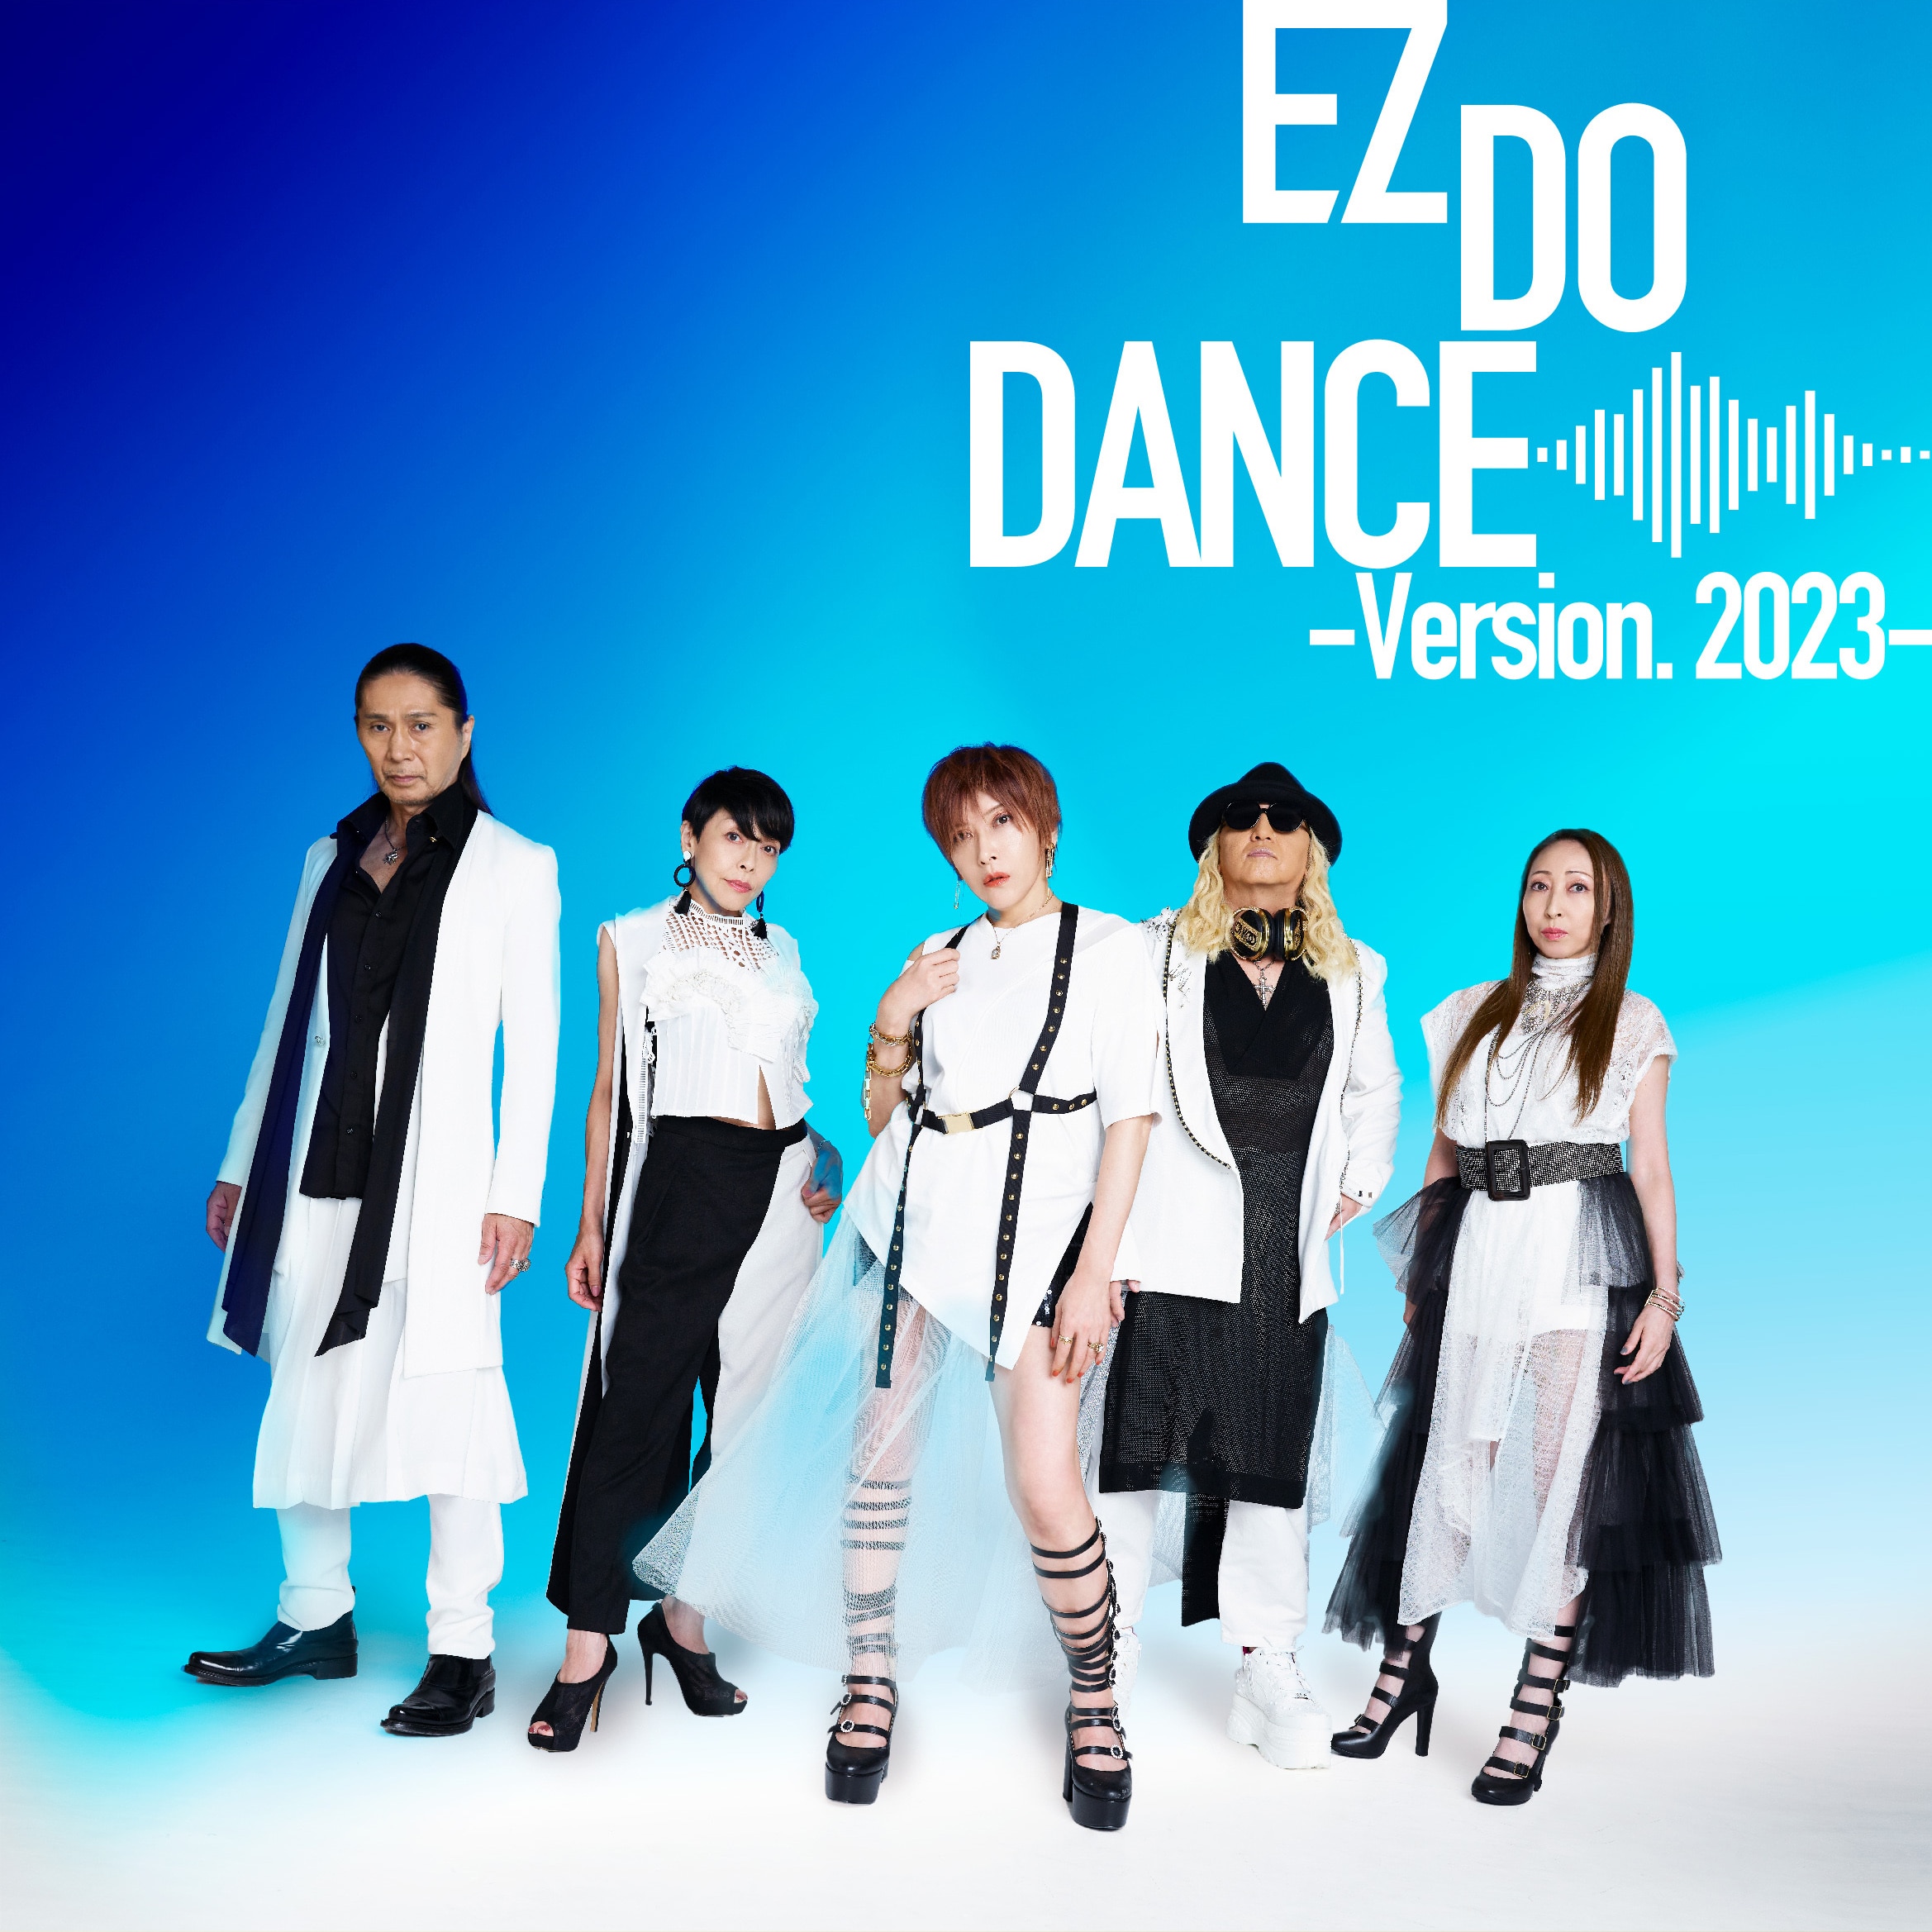 EZ DO DANCE -Version. 2023-